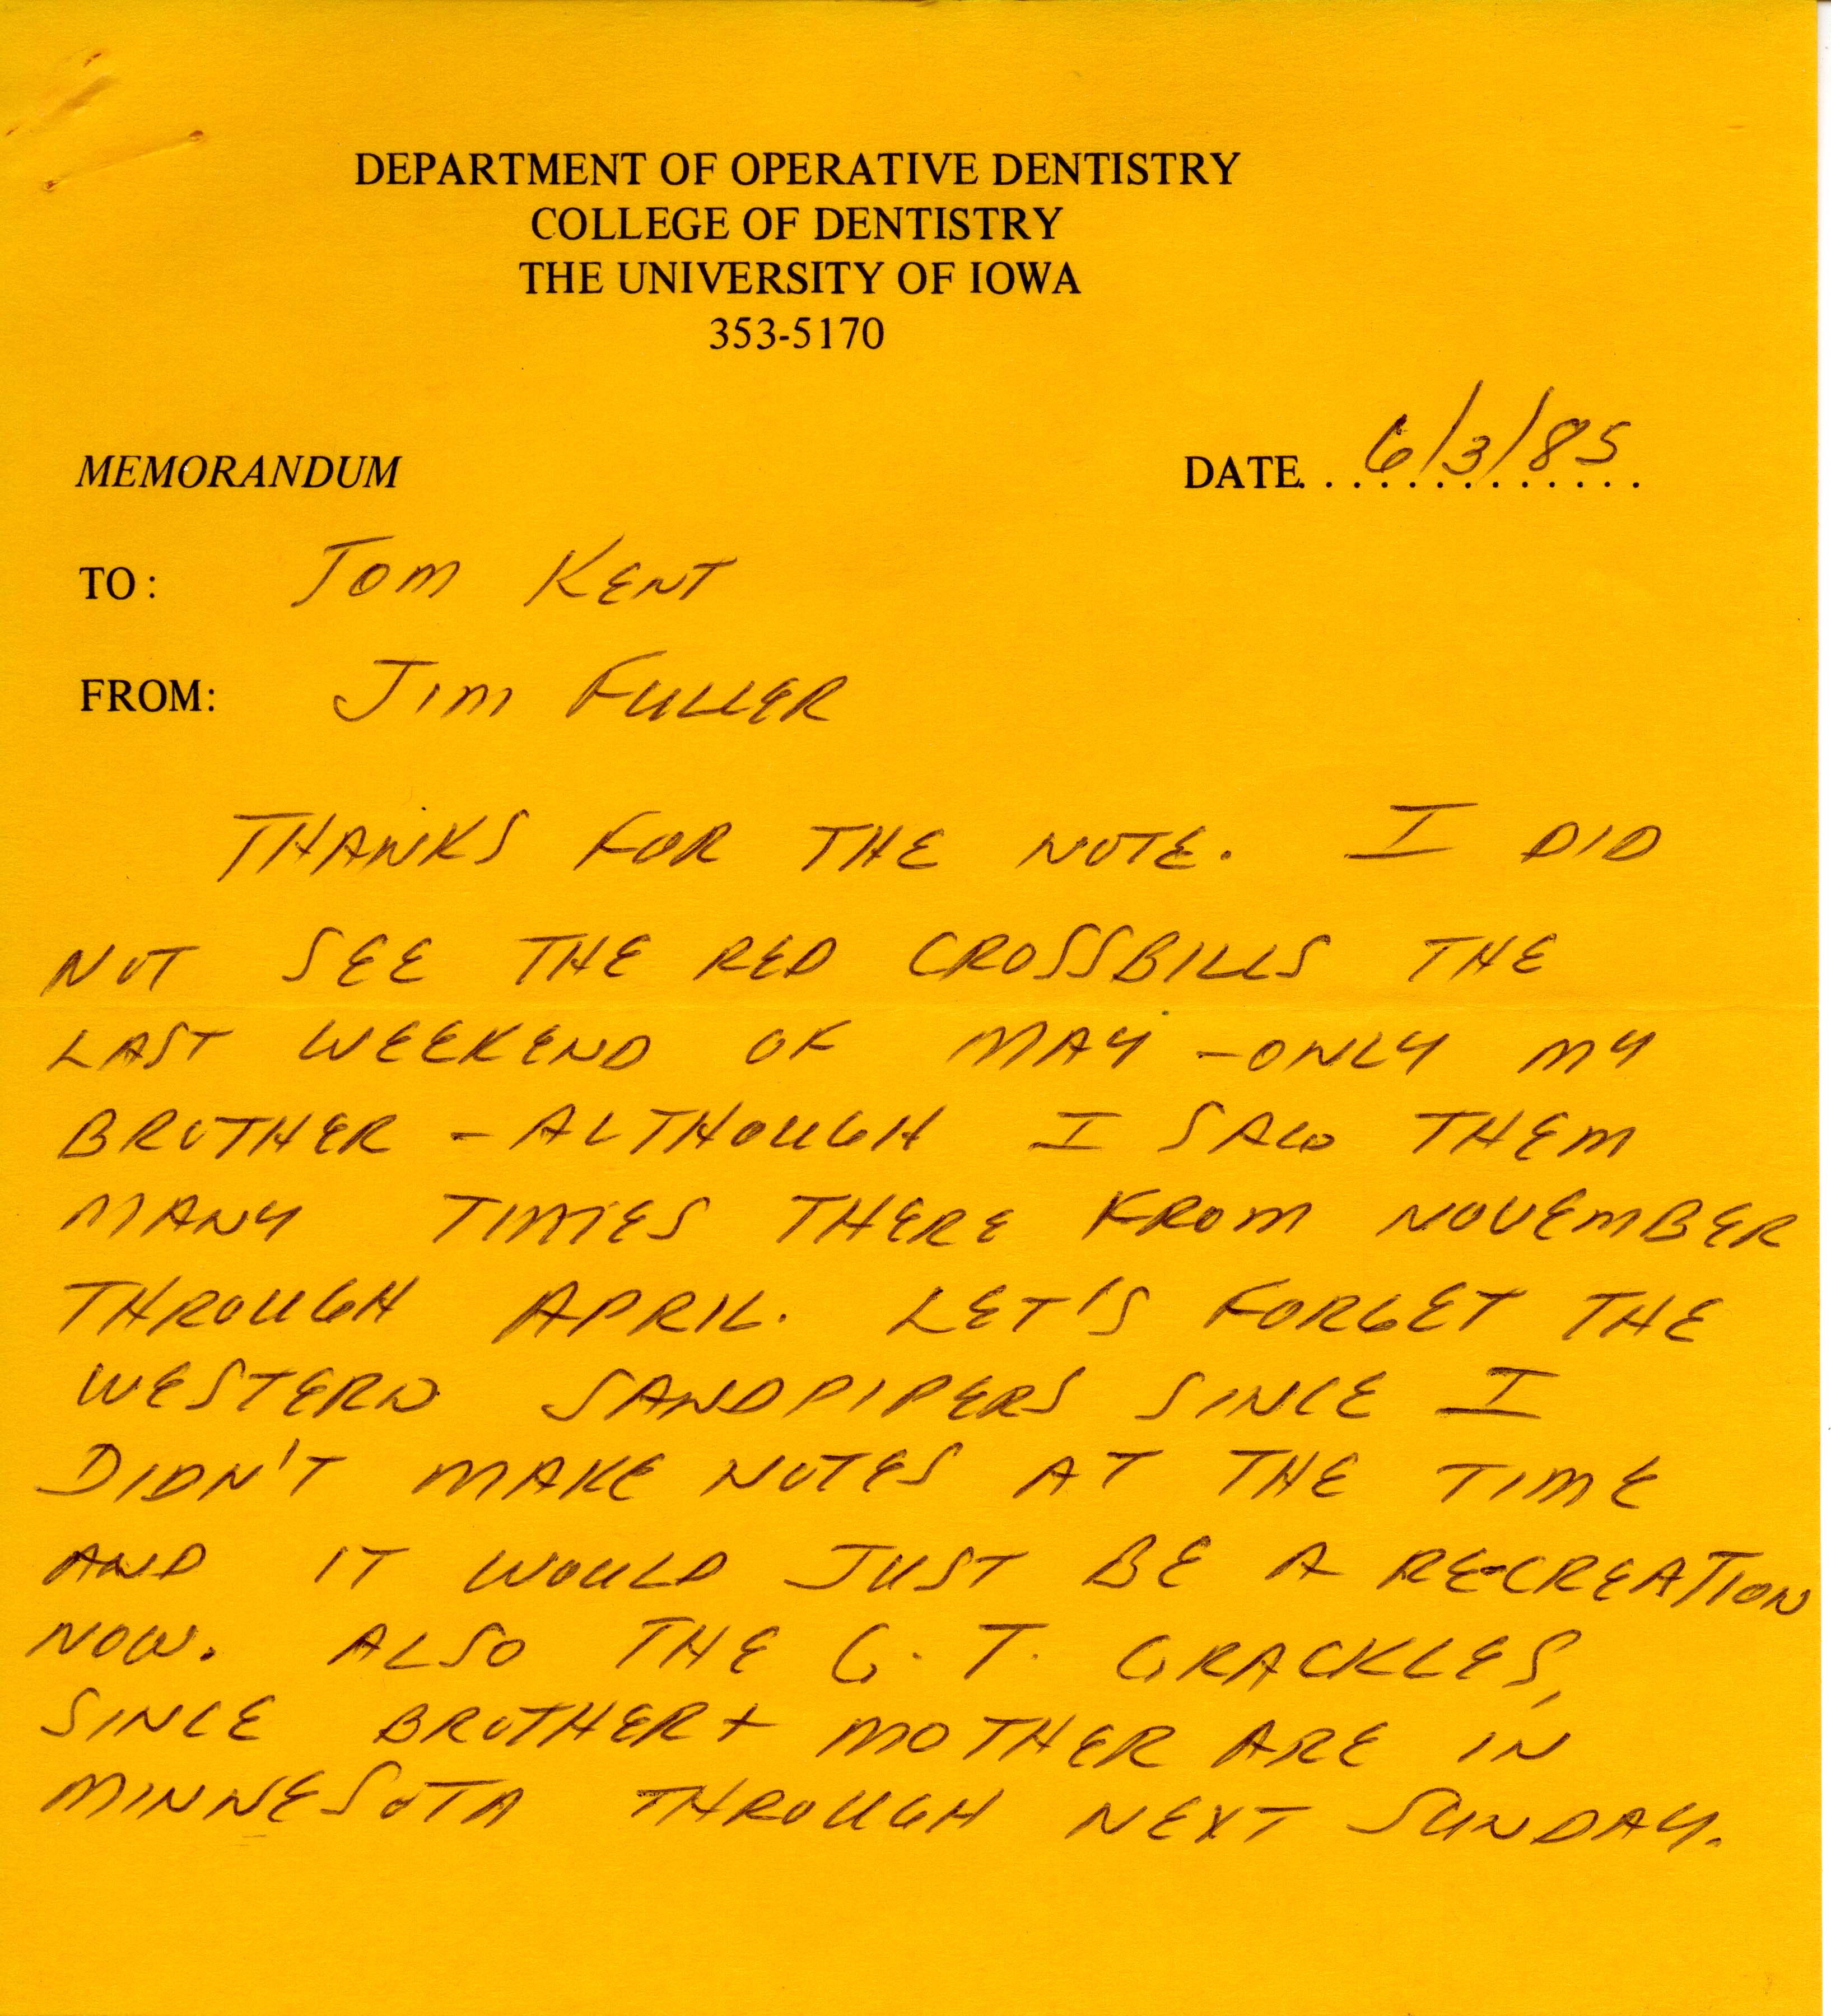 James L. Fuller notes to Thomas H. Kent regarding bird sightings and accompanying field notes, June 3, 1985